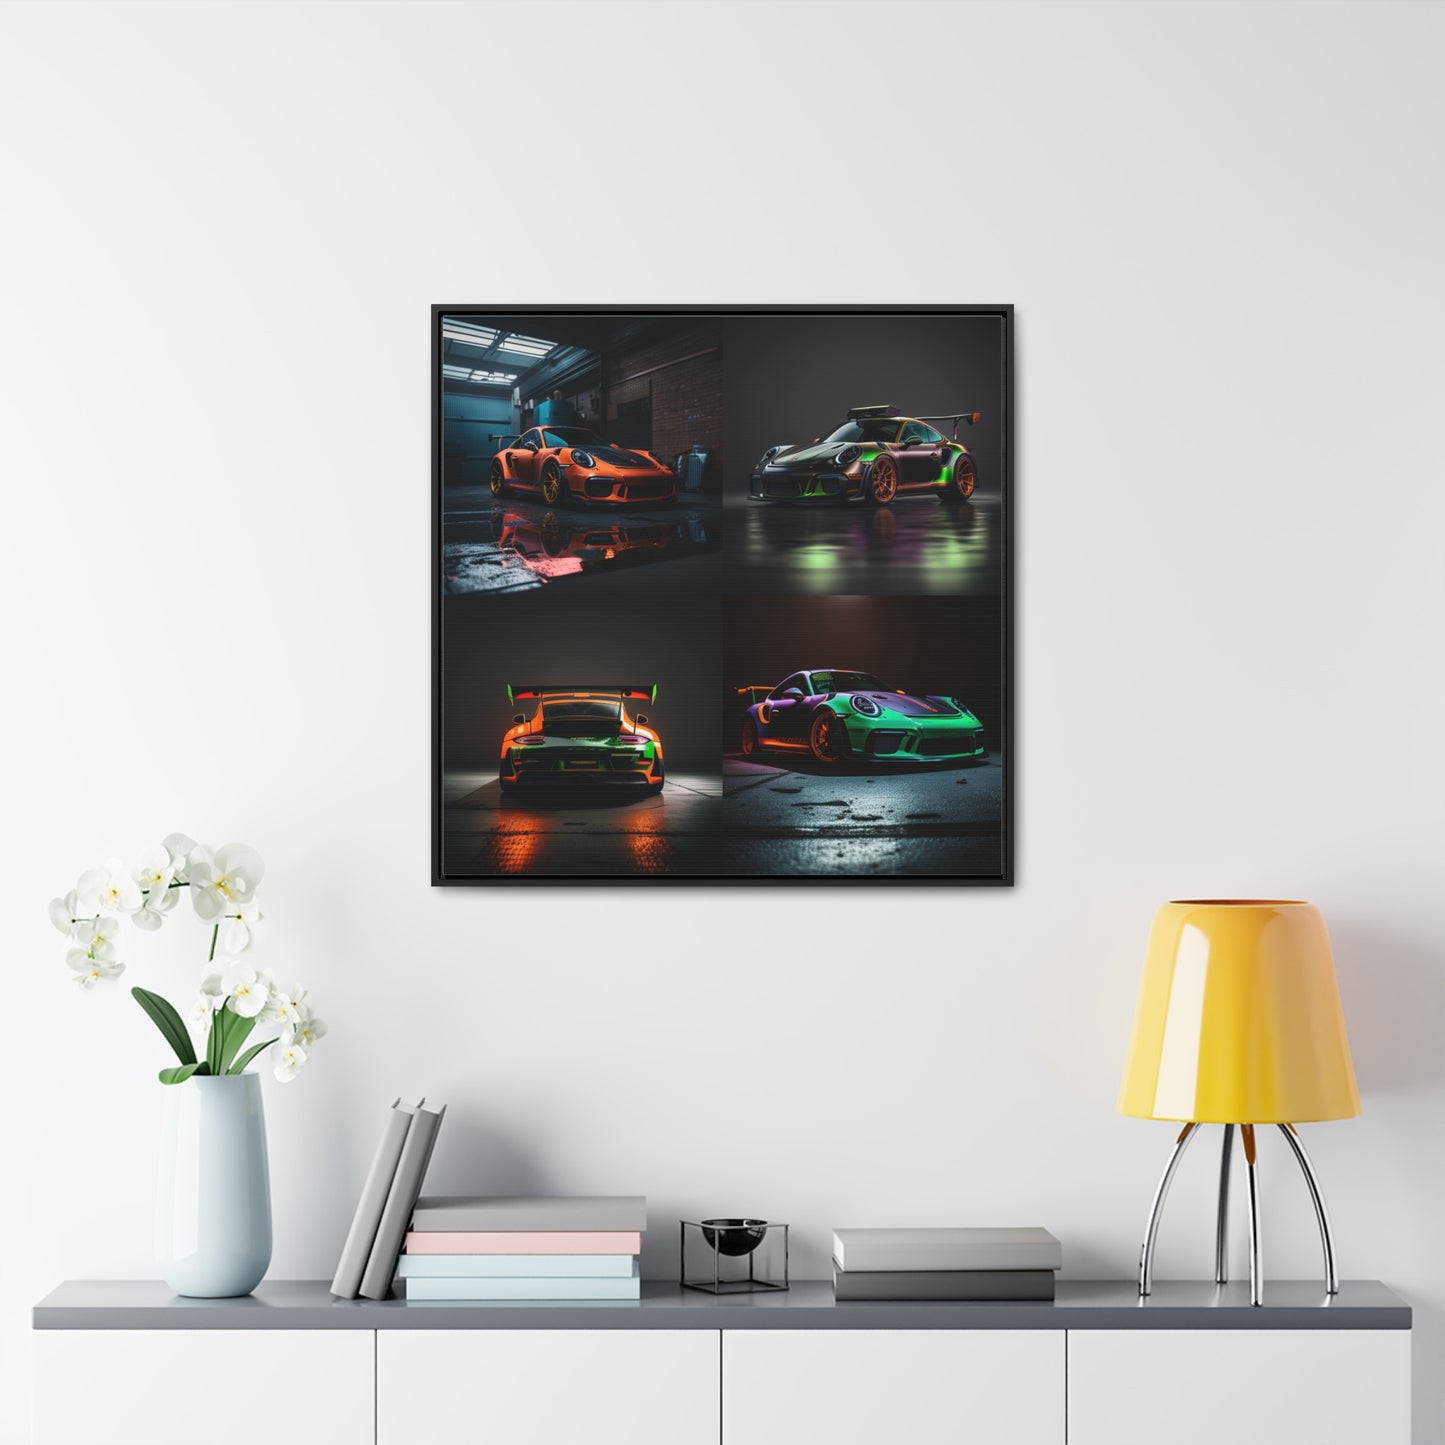 Gallery Canvas Wraps, Square Frame Porsche Color 5